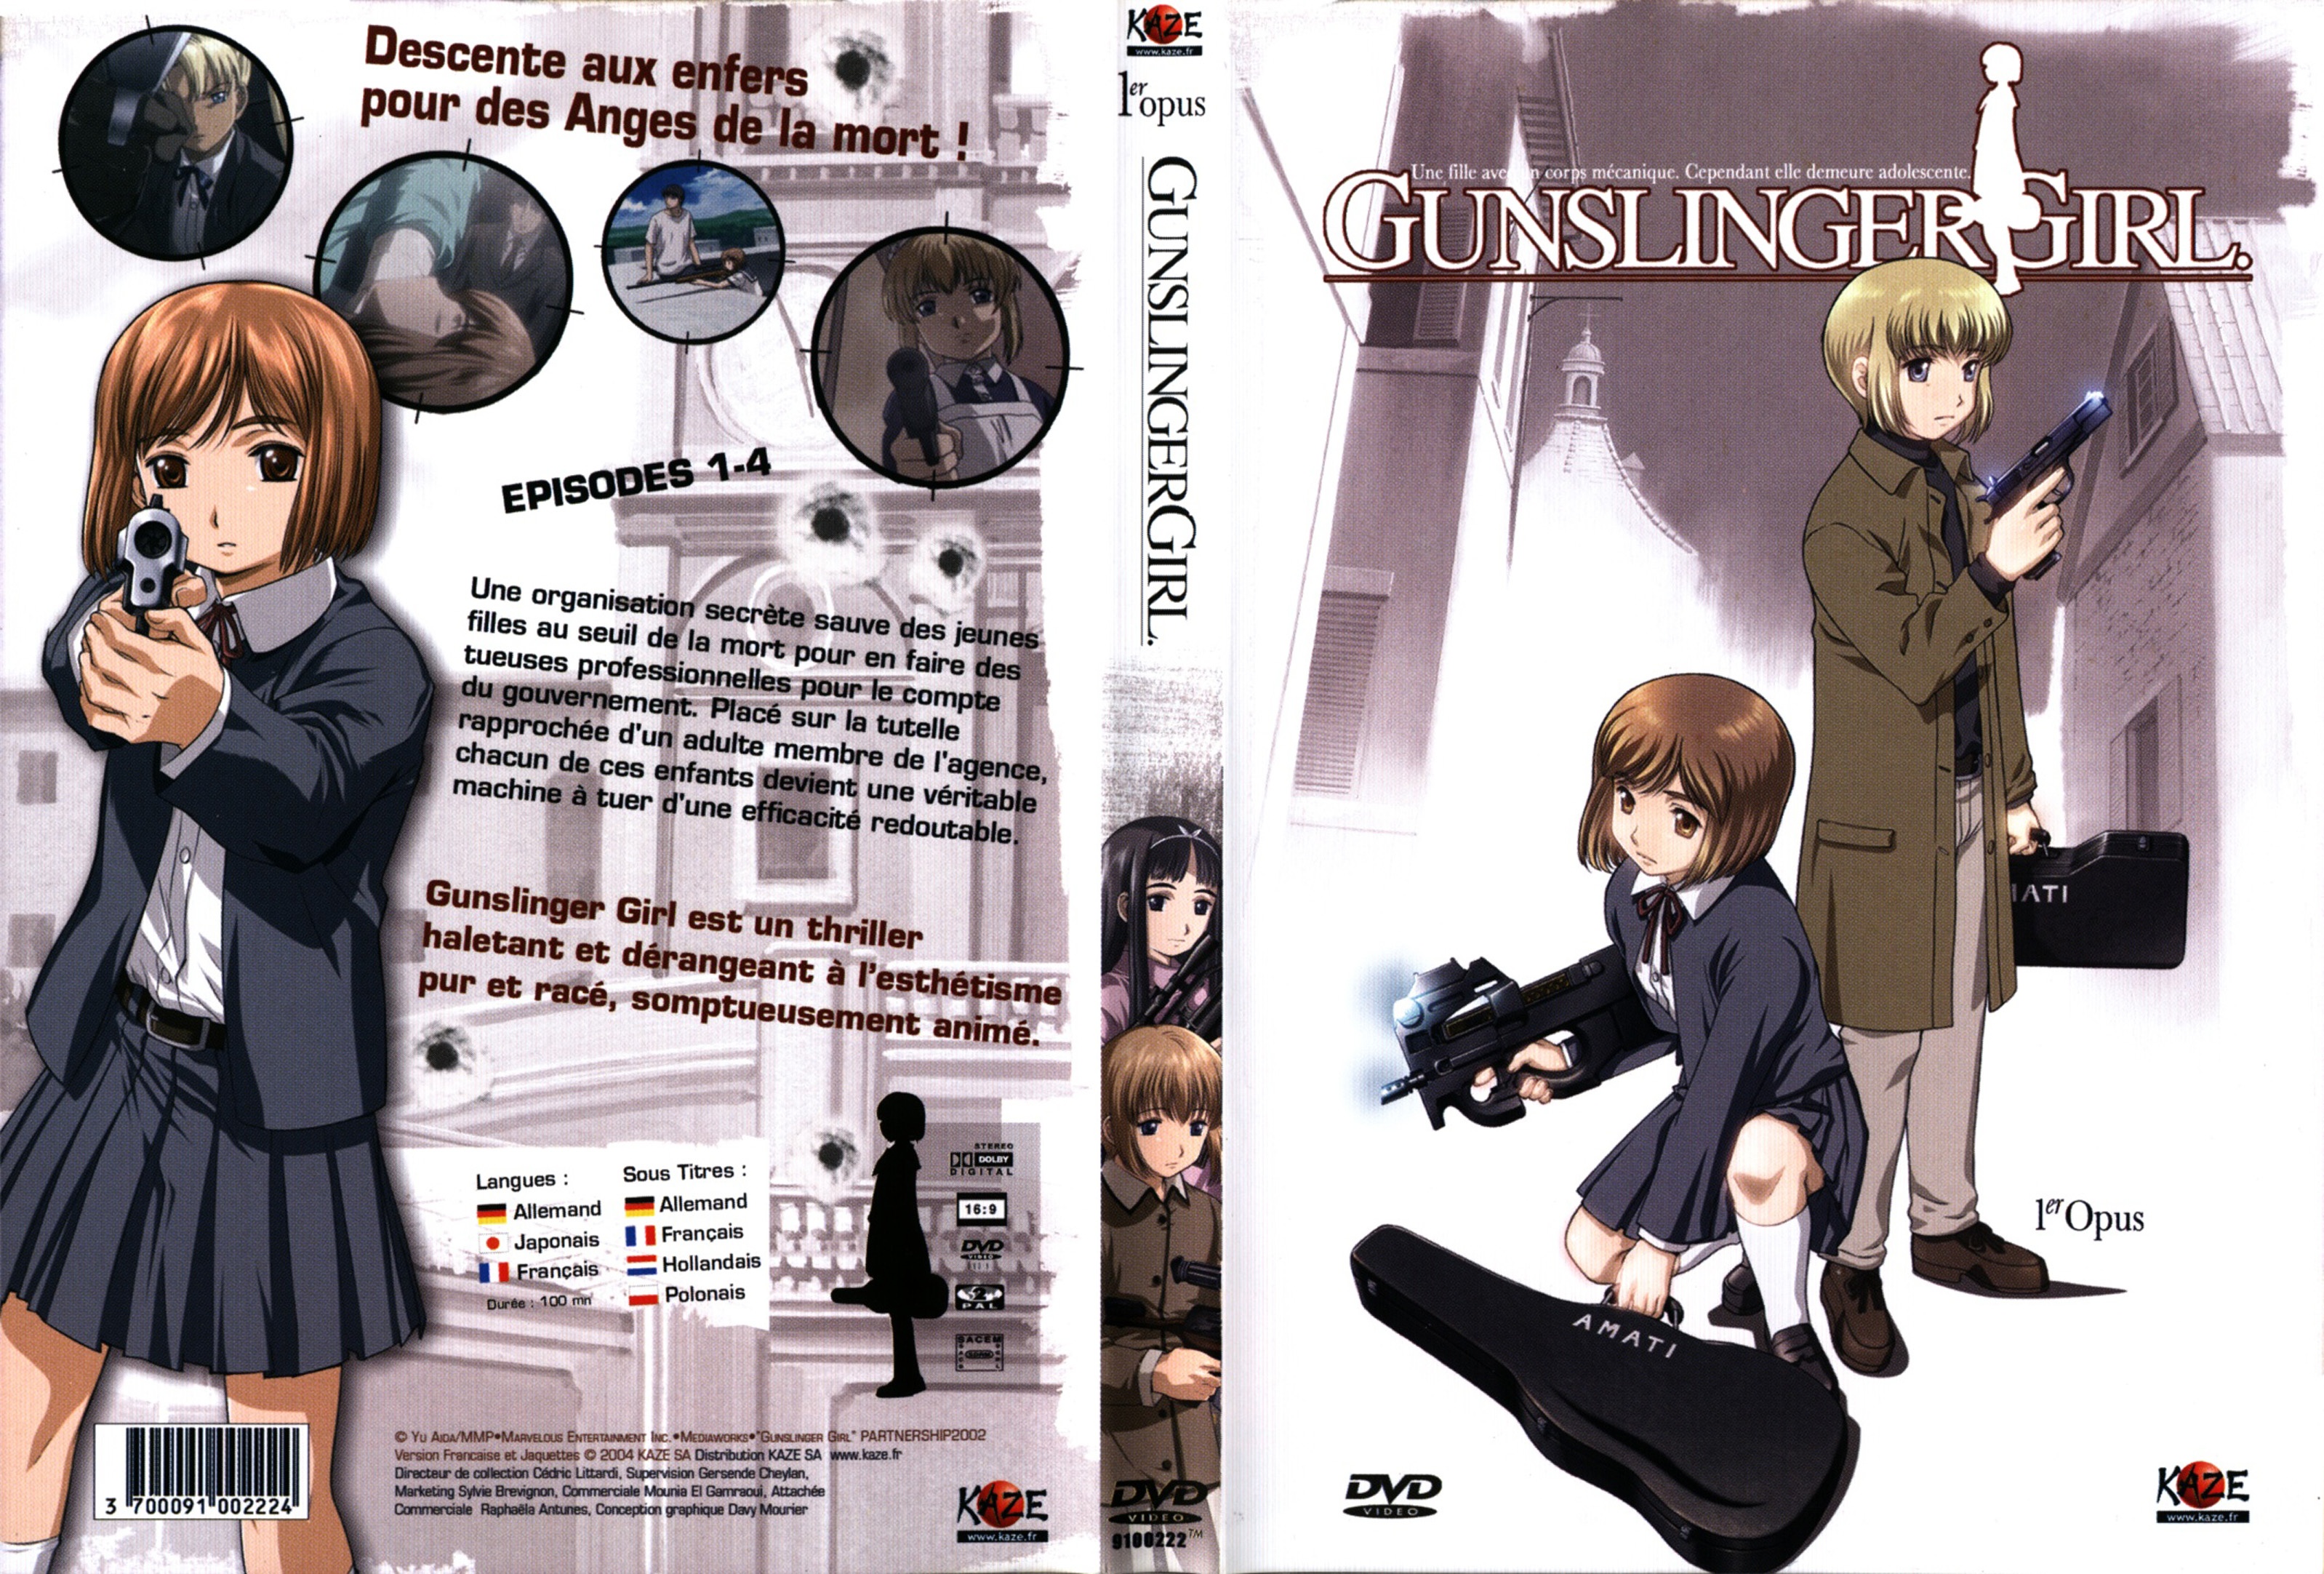 Jaquette DVD Gunslinger Girl vol 01